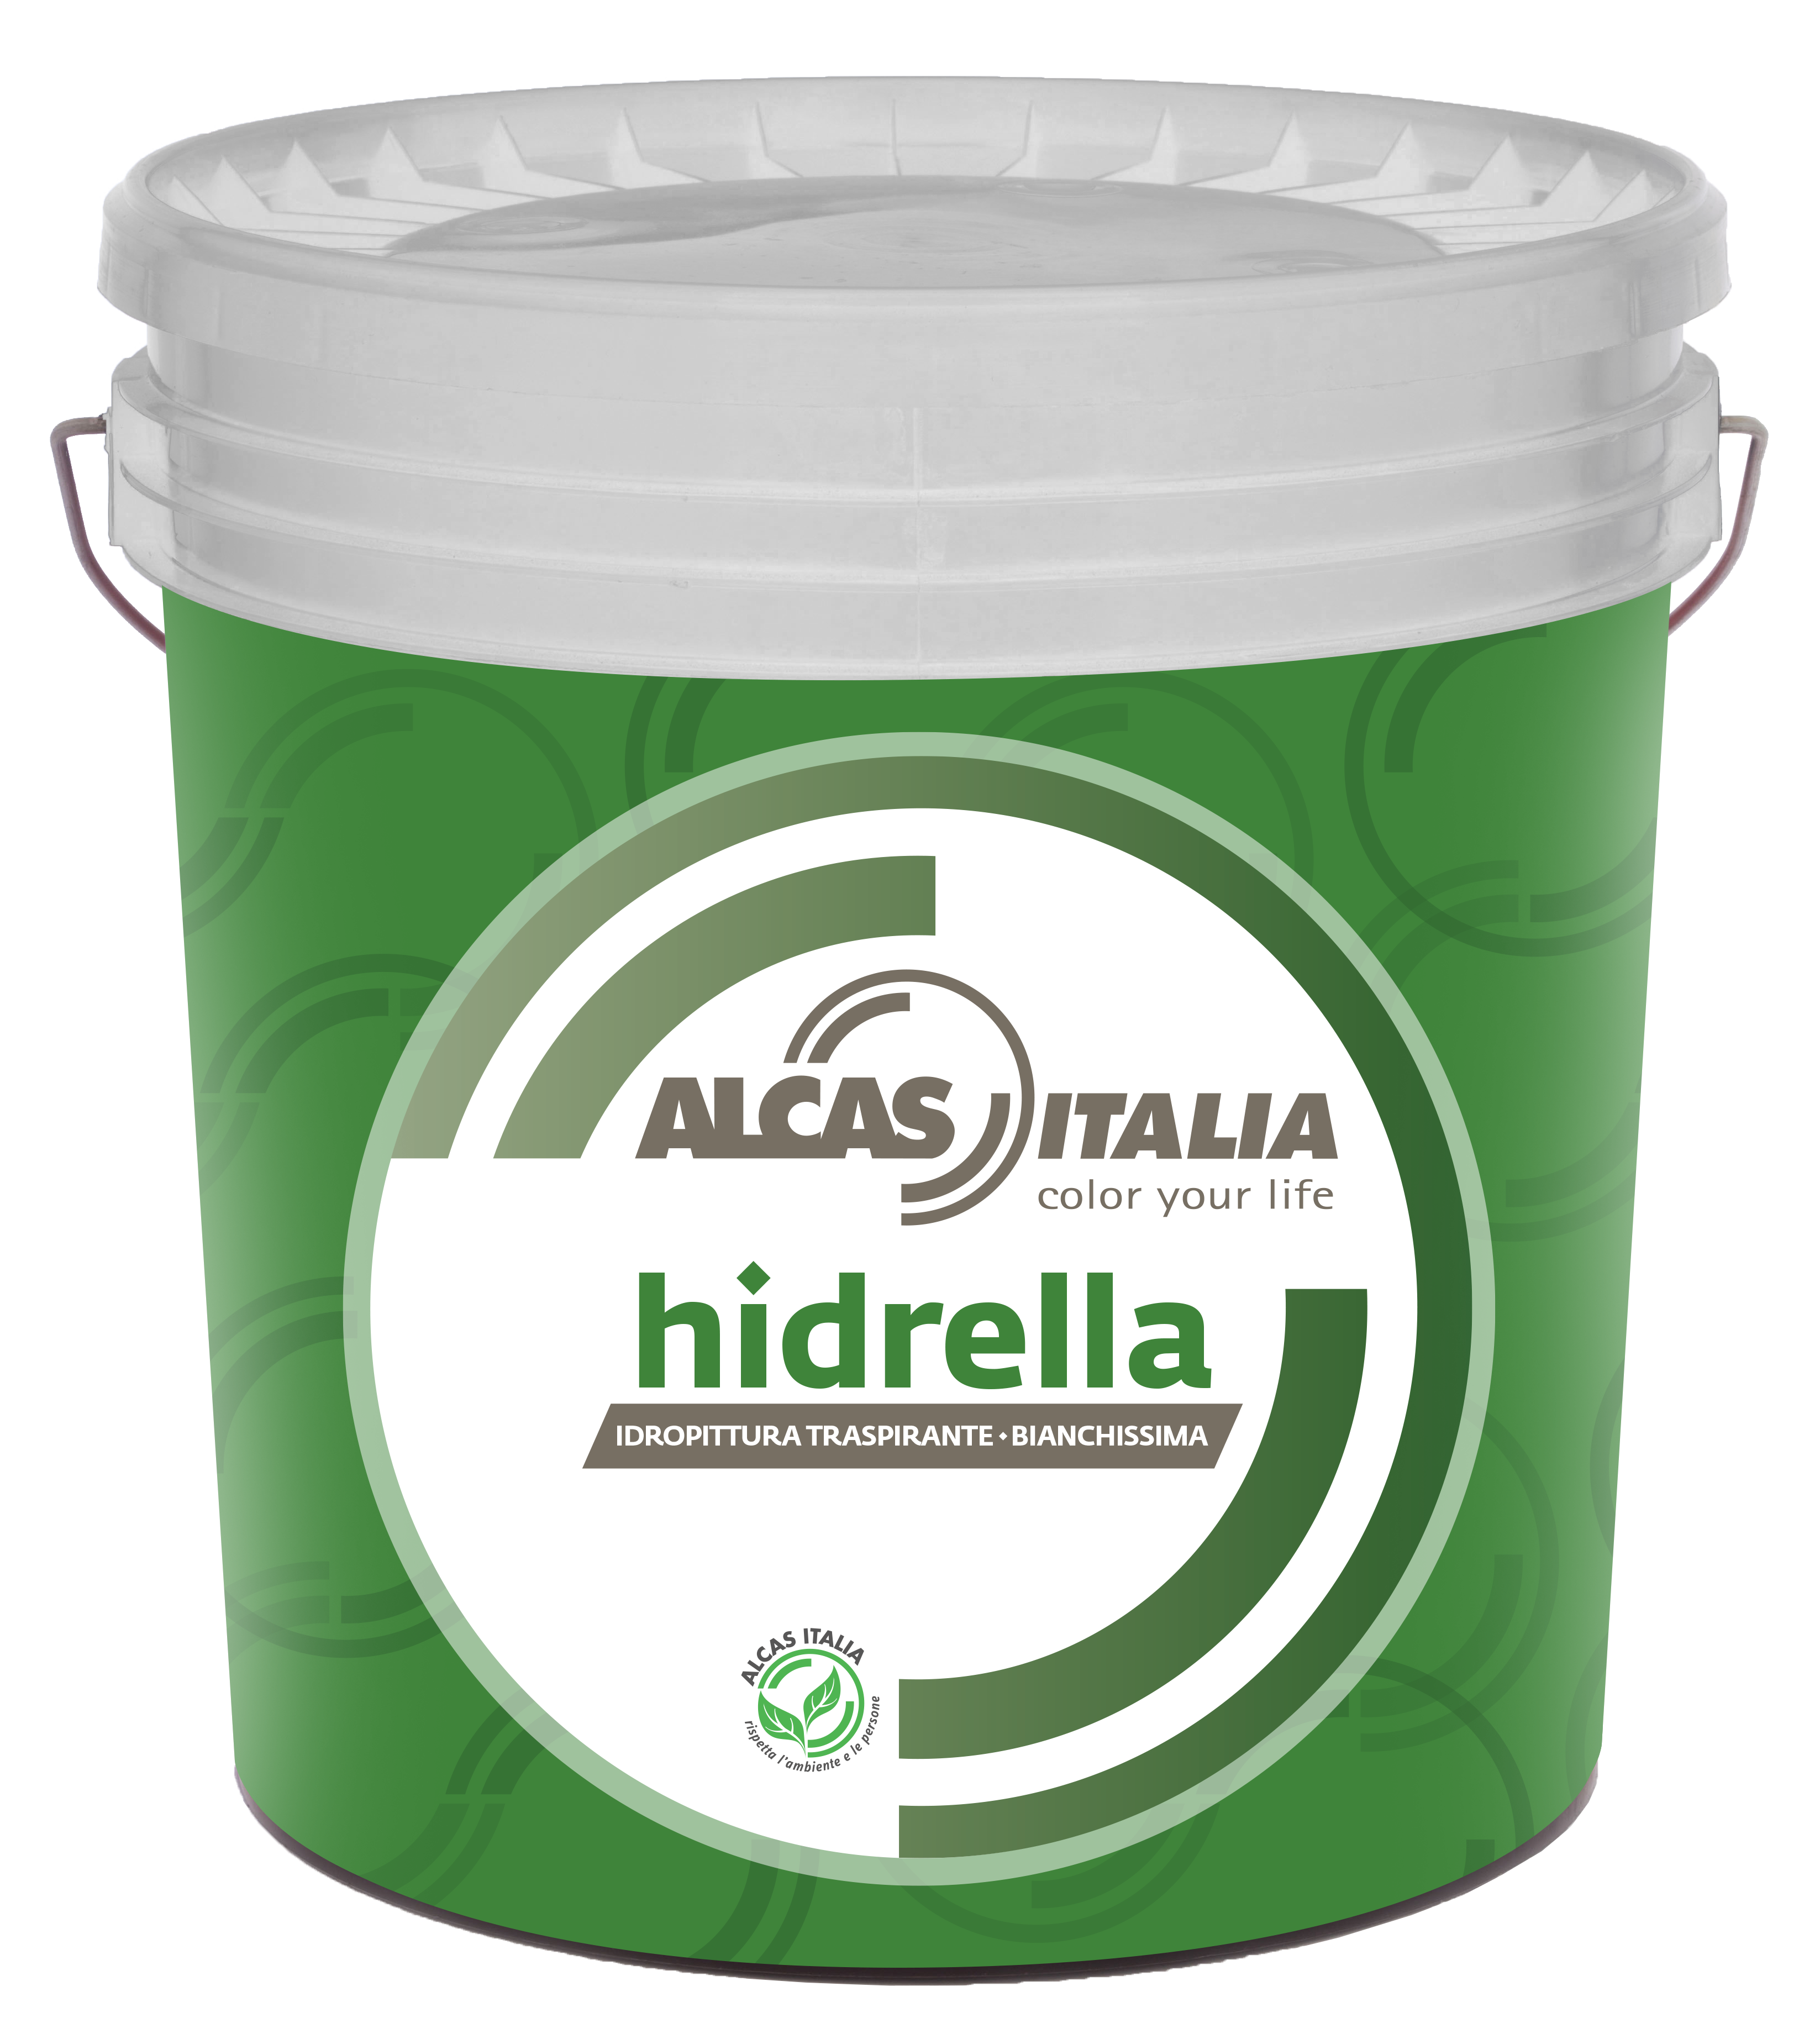 Hidrella